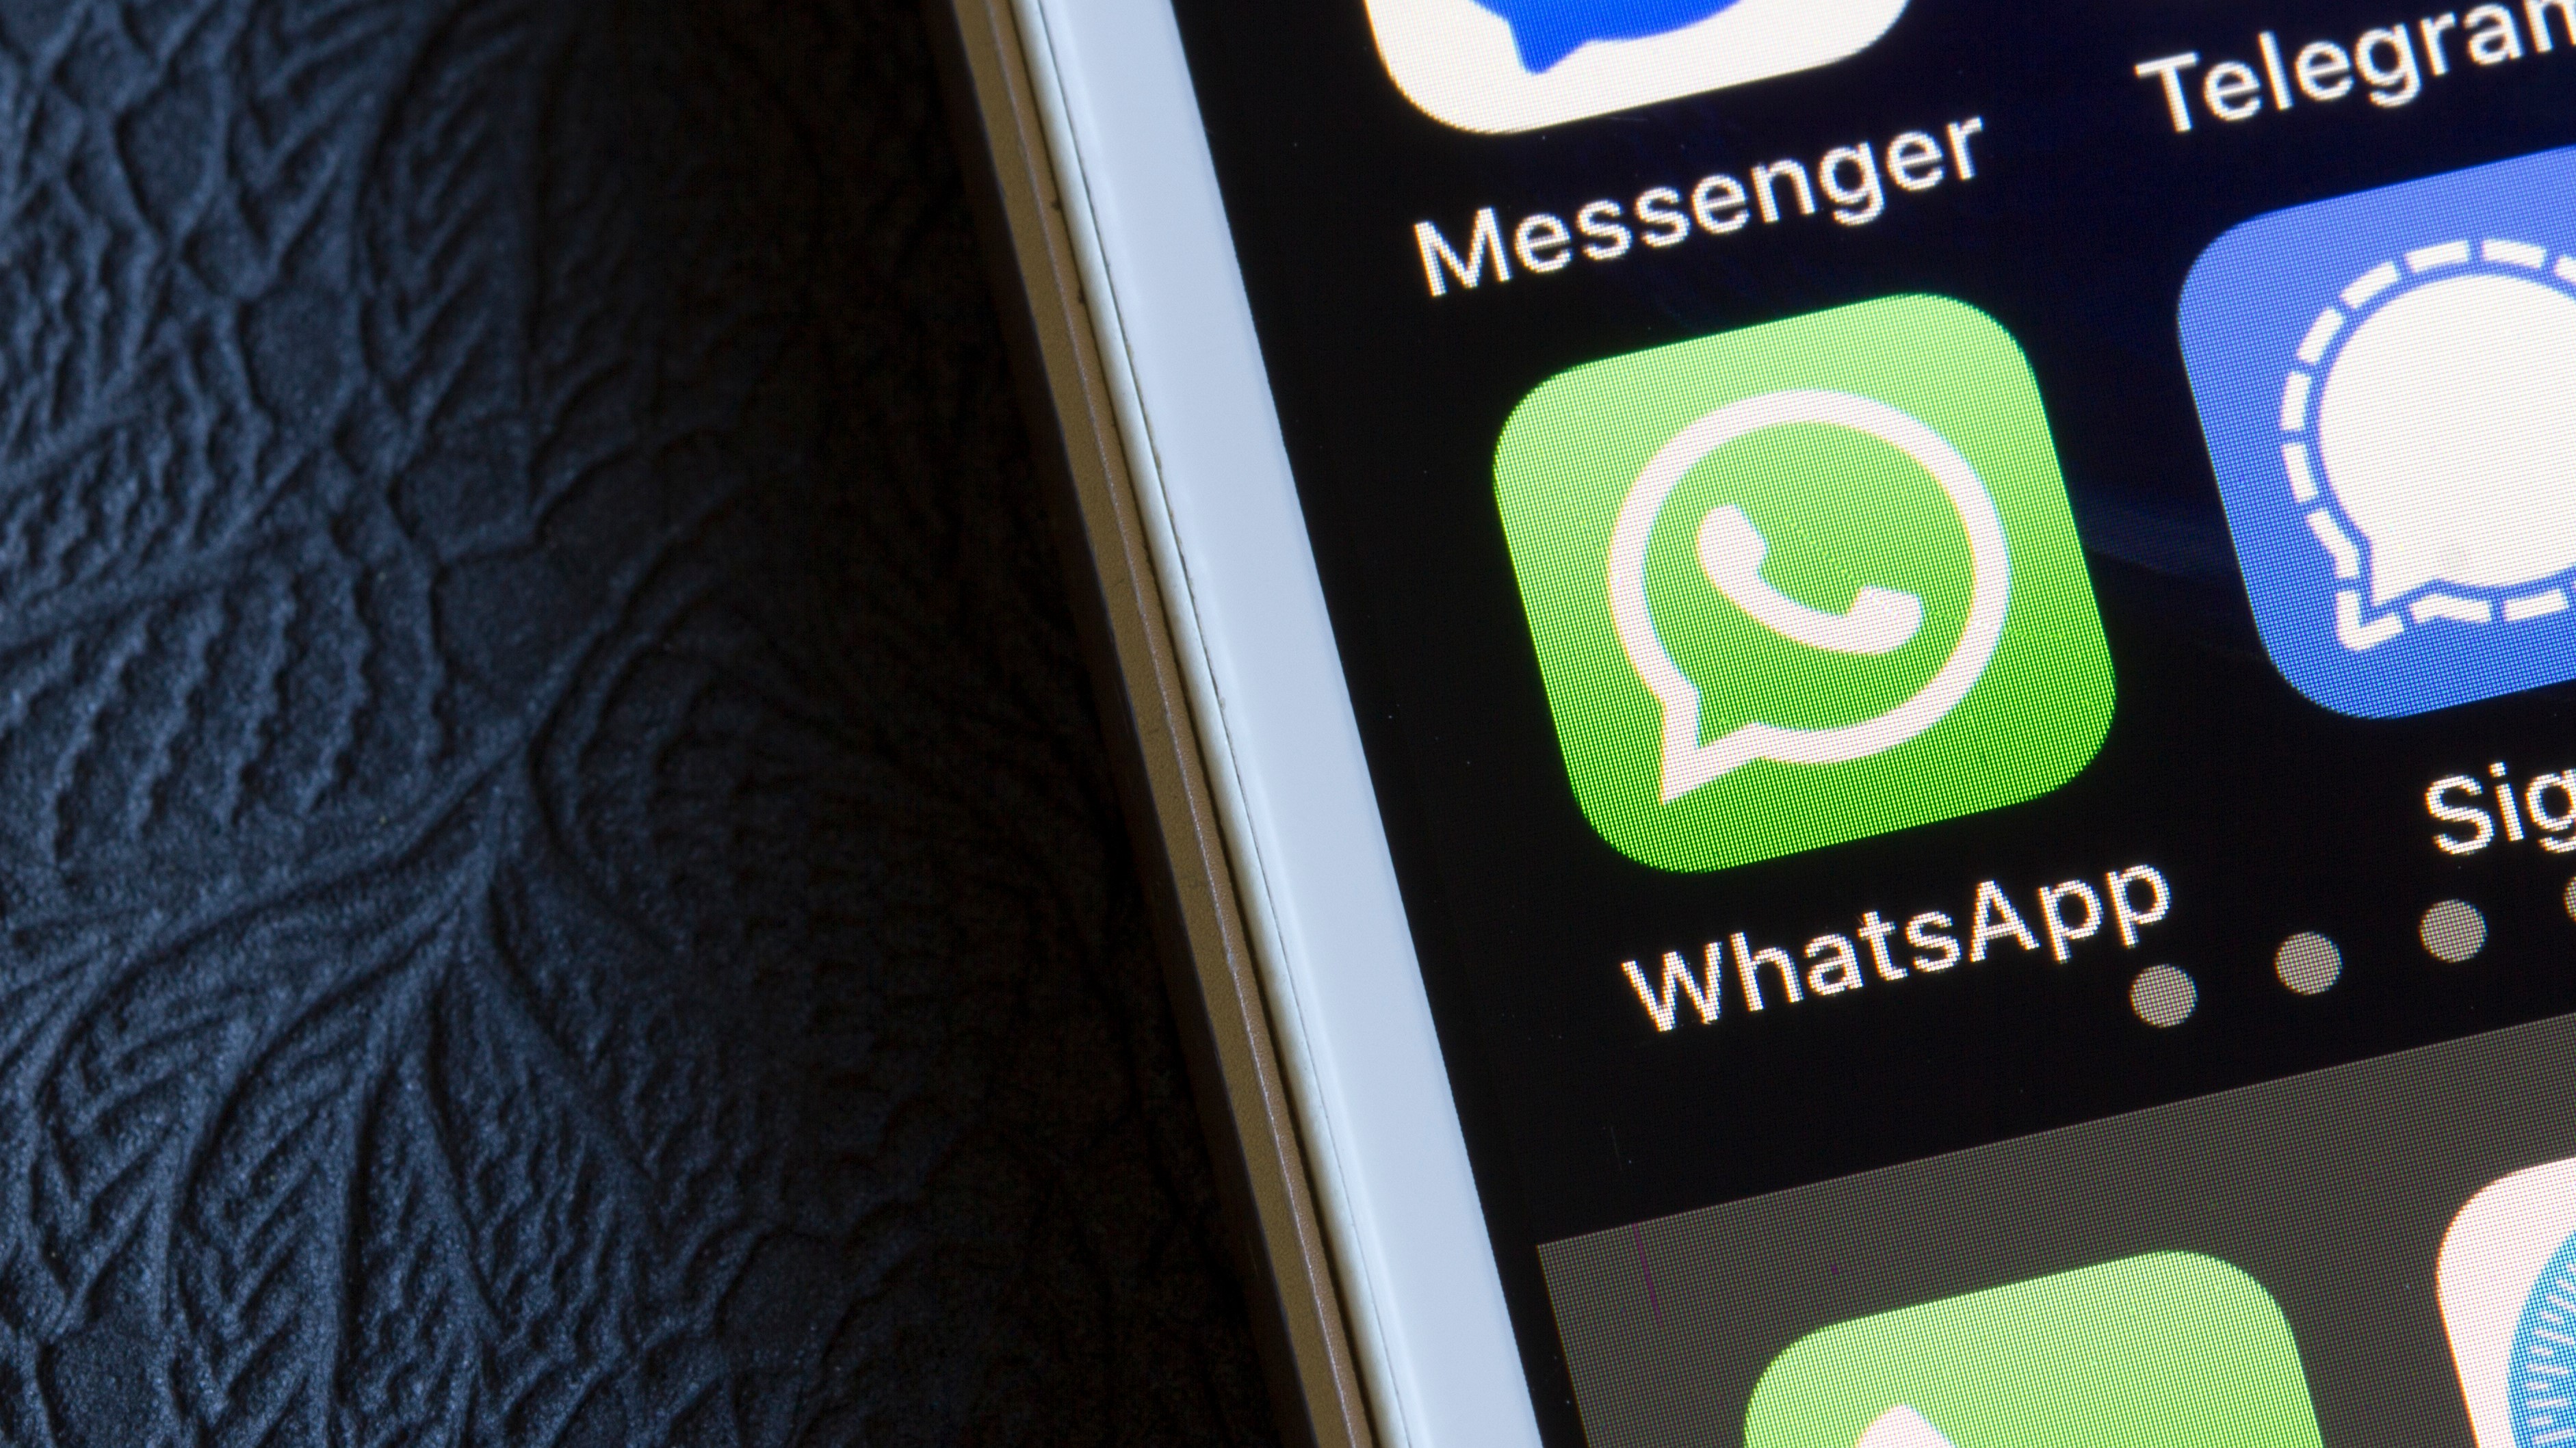 Whatsapp Is Planning A Big Improvement To Its Photo Sharing Skills